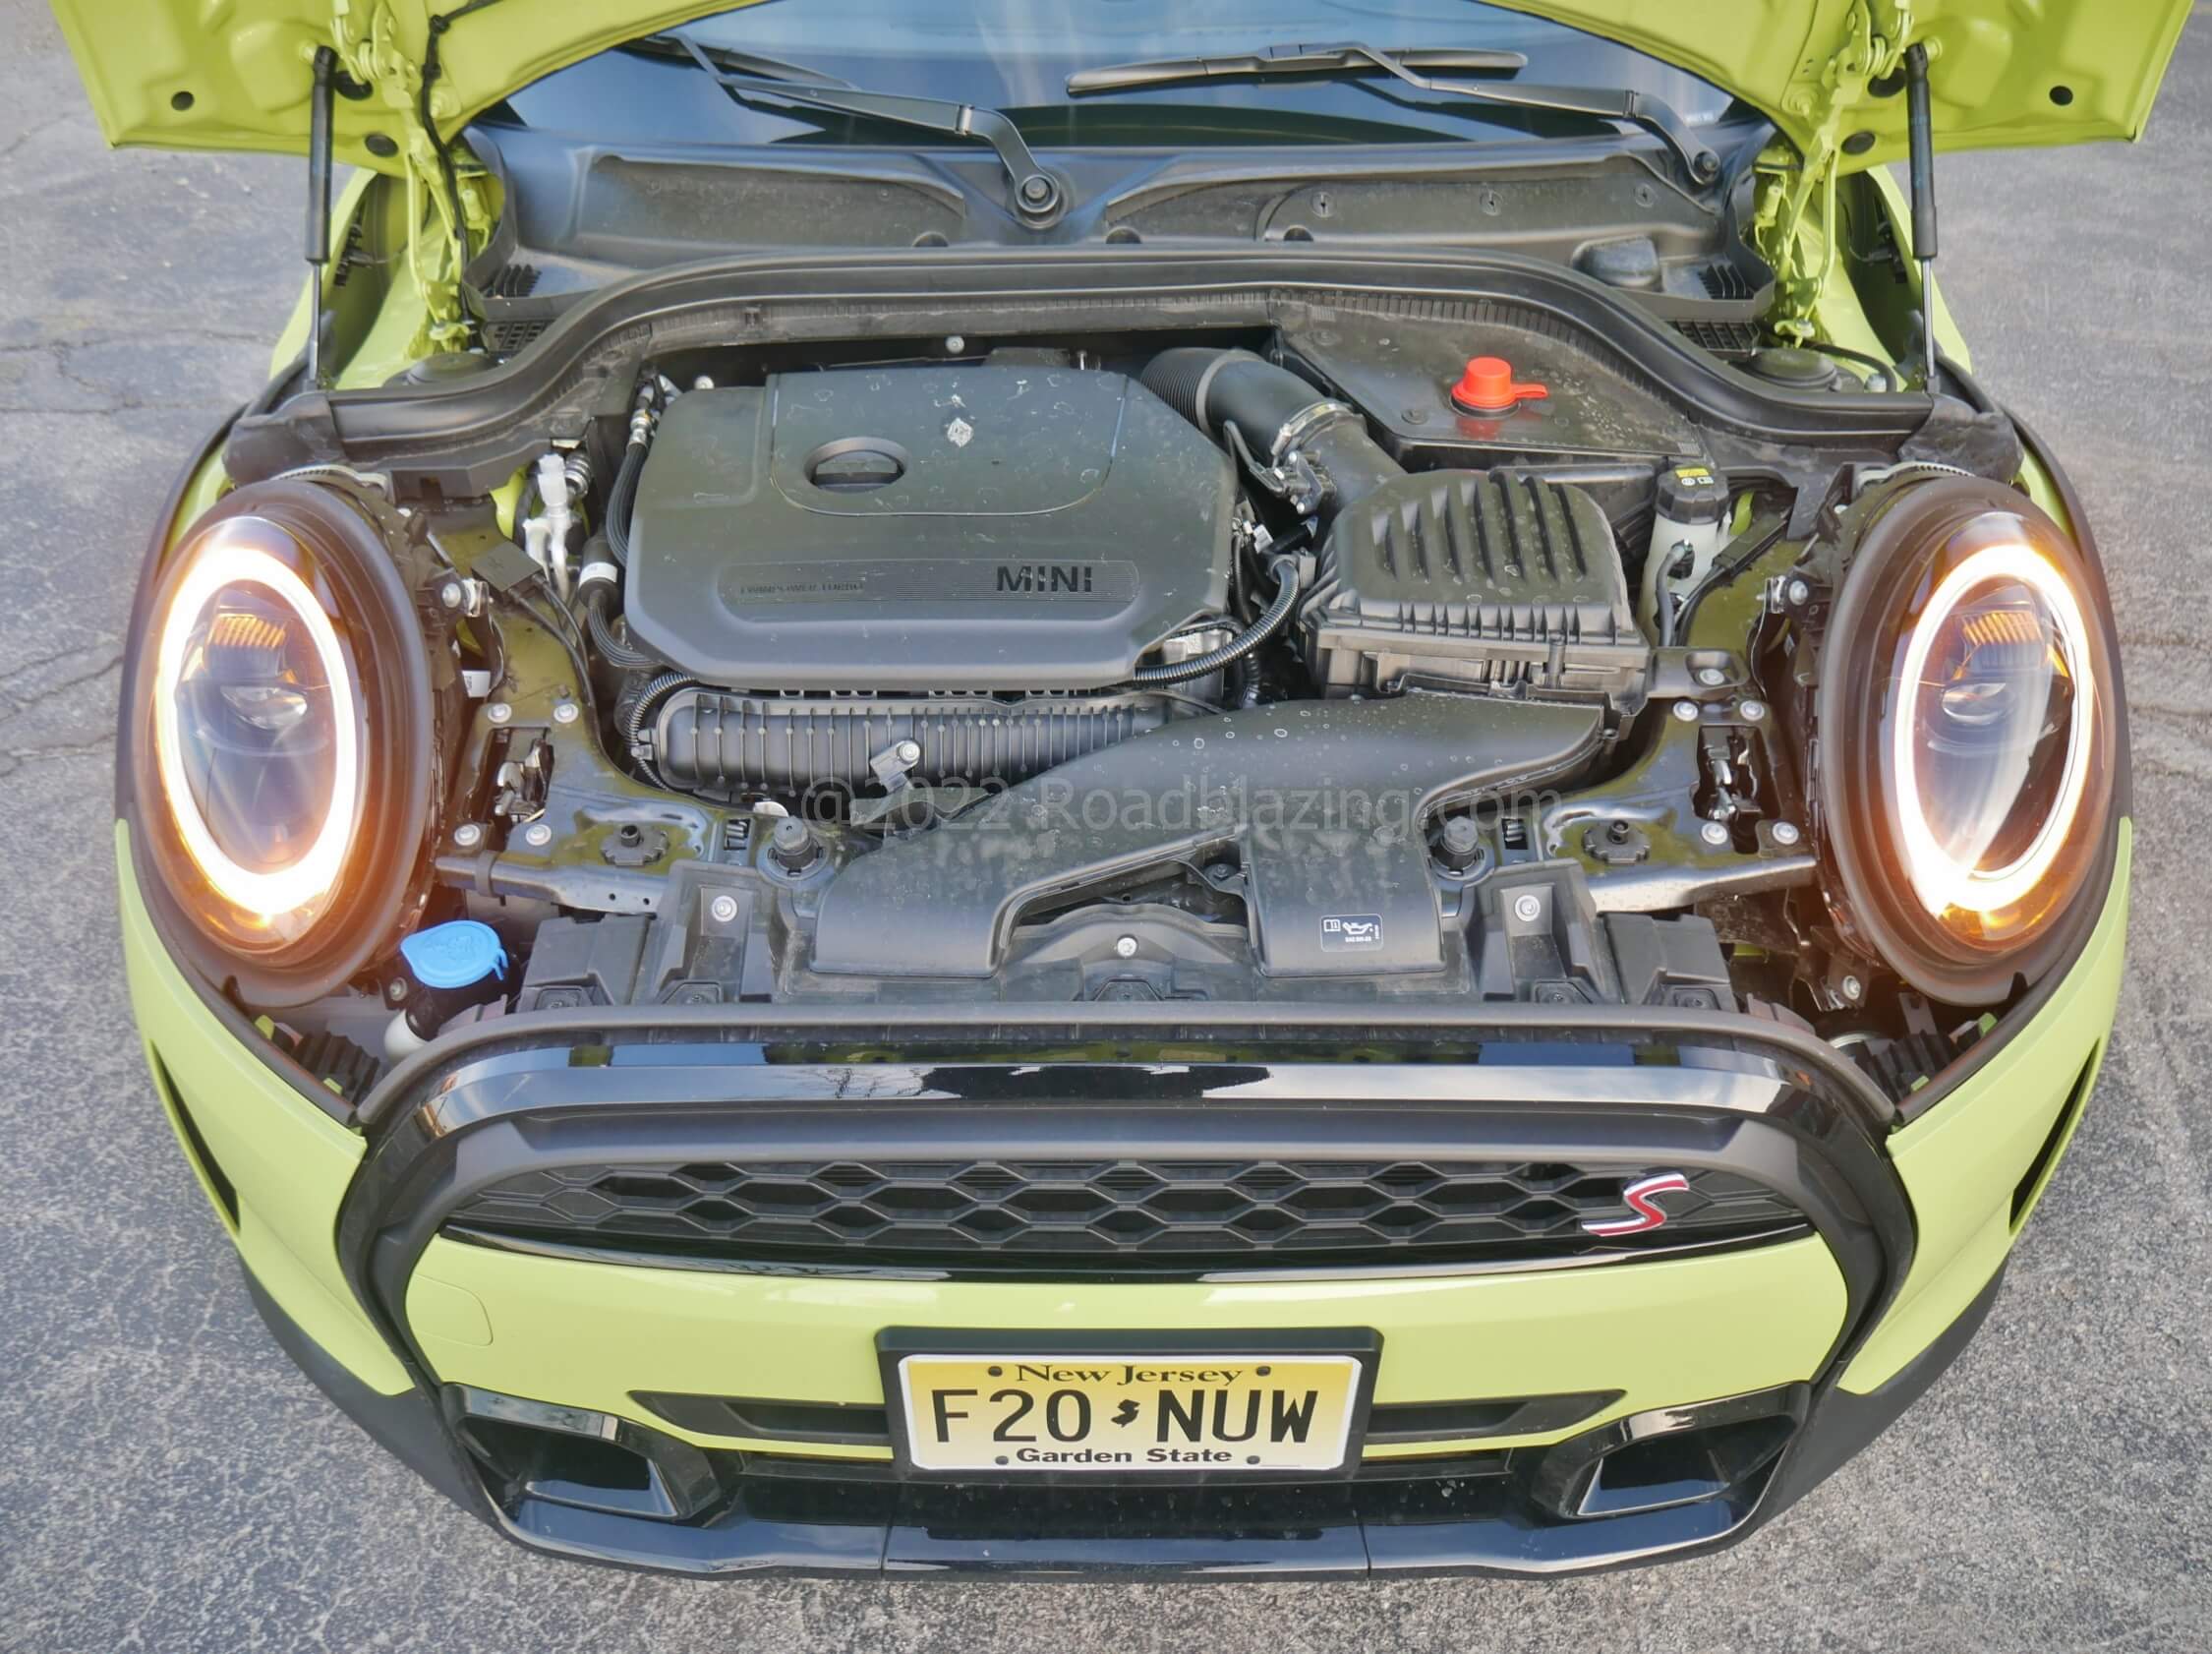 2022 MINI Cooper S Convertible: B48A20M1 turbo gas I-4 = 189 hp, 206 lb-ft, 28 MPG and fun exhaust pops